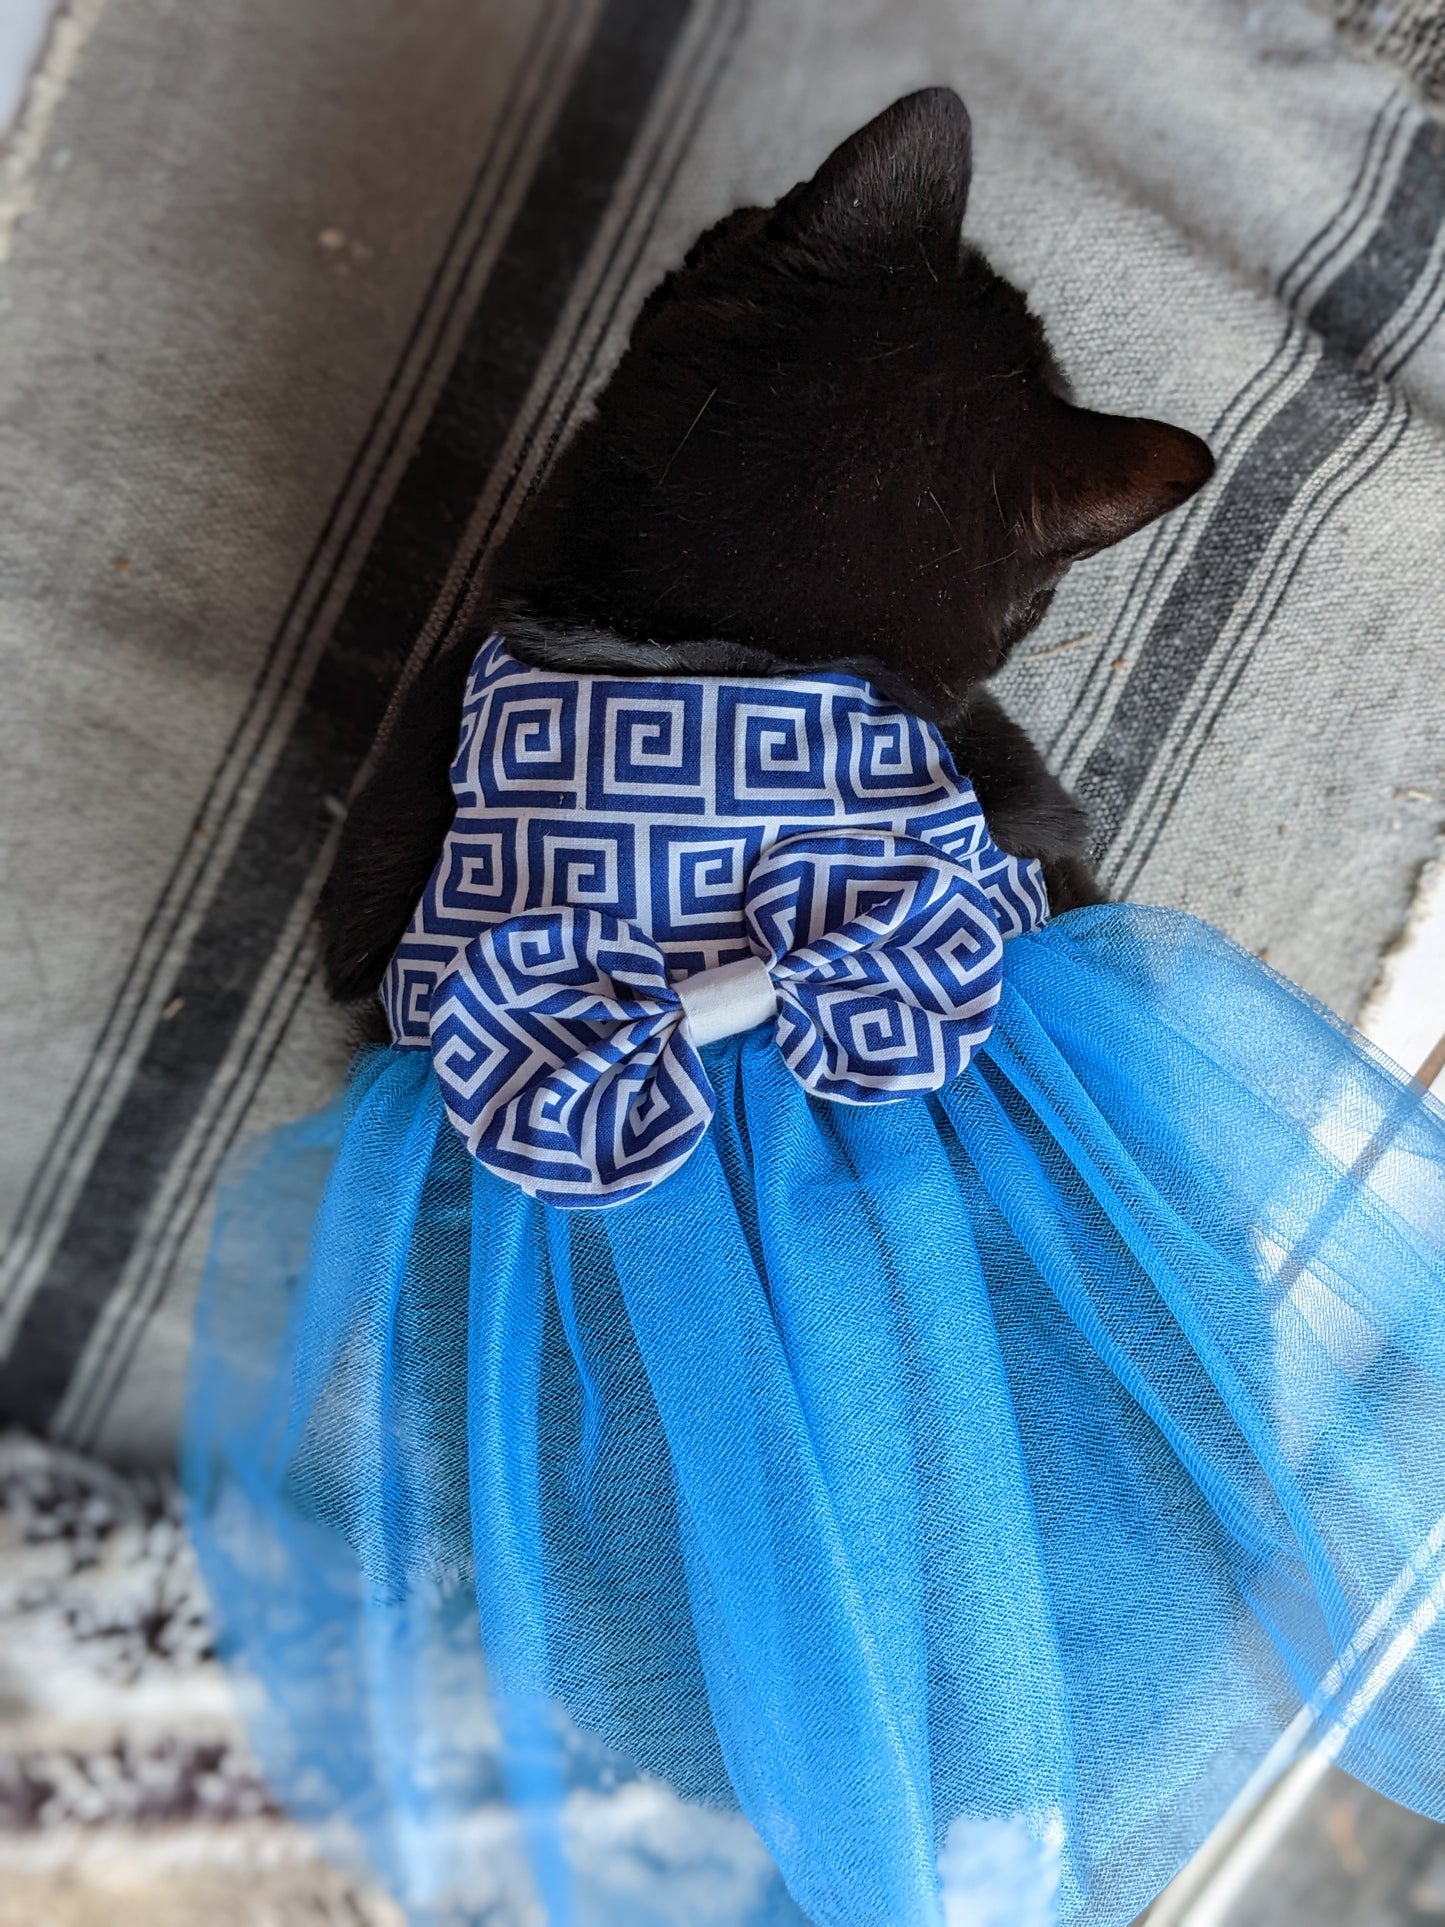 Blue Cat Dresses for Cat